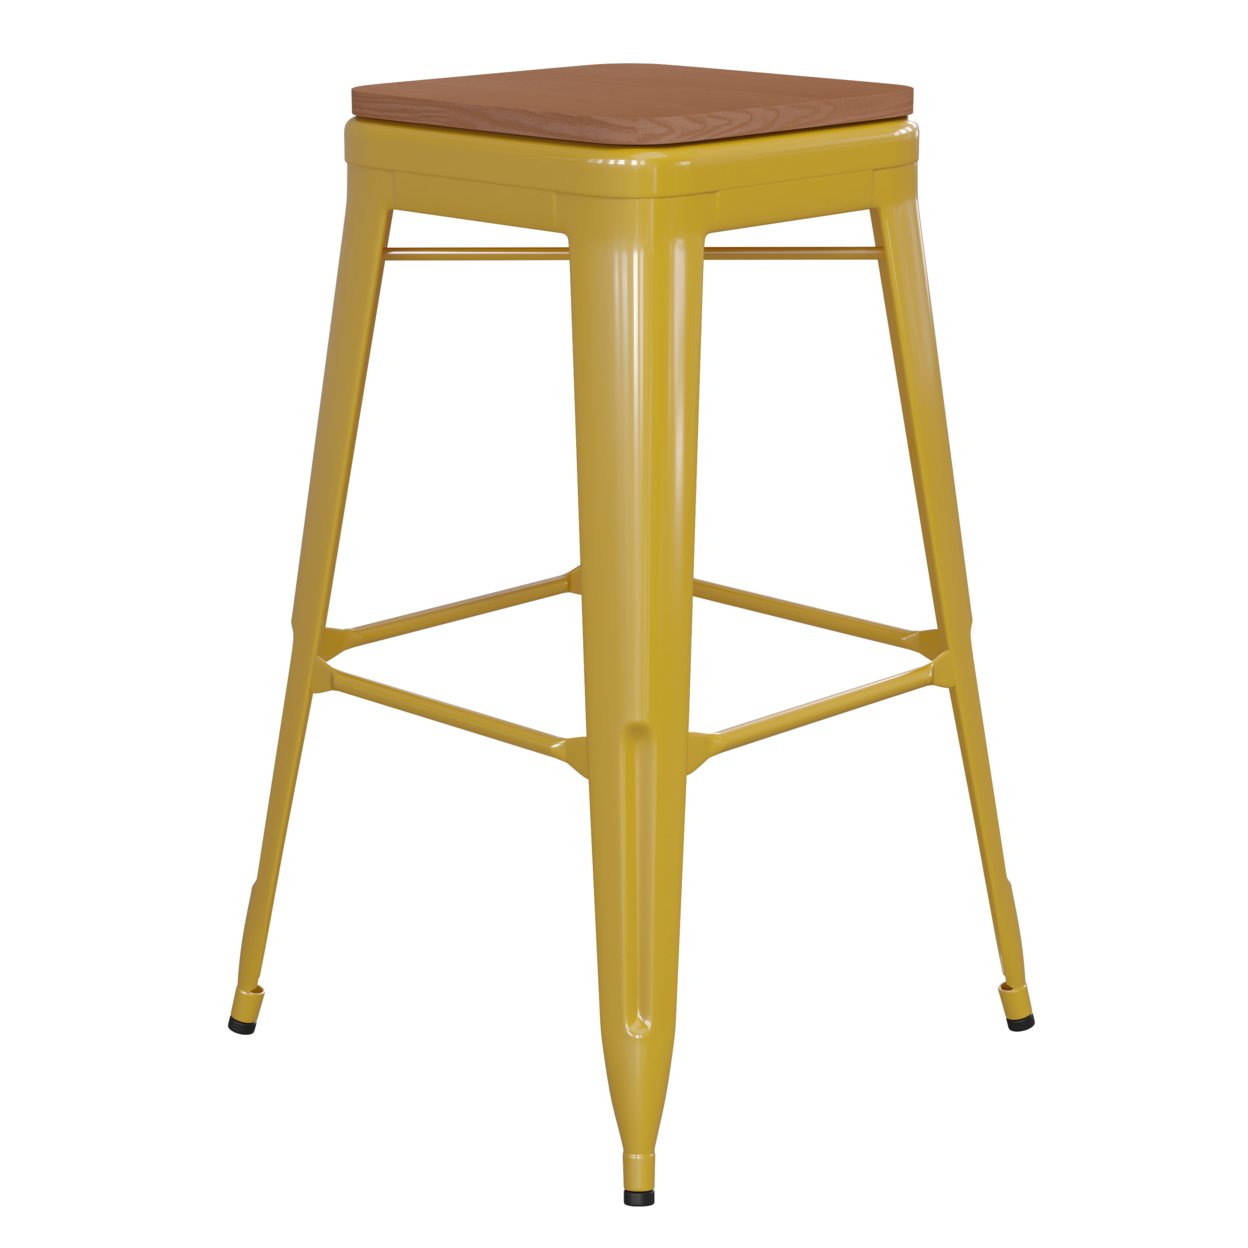 30 Inch Metal Stool, Teak Brown Wood Seat, Yellow